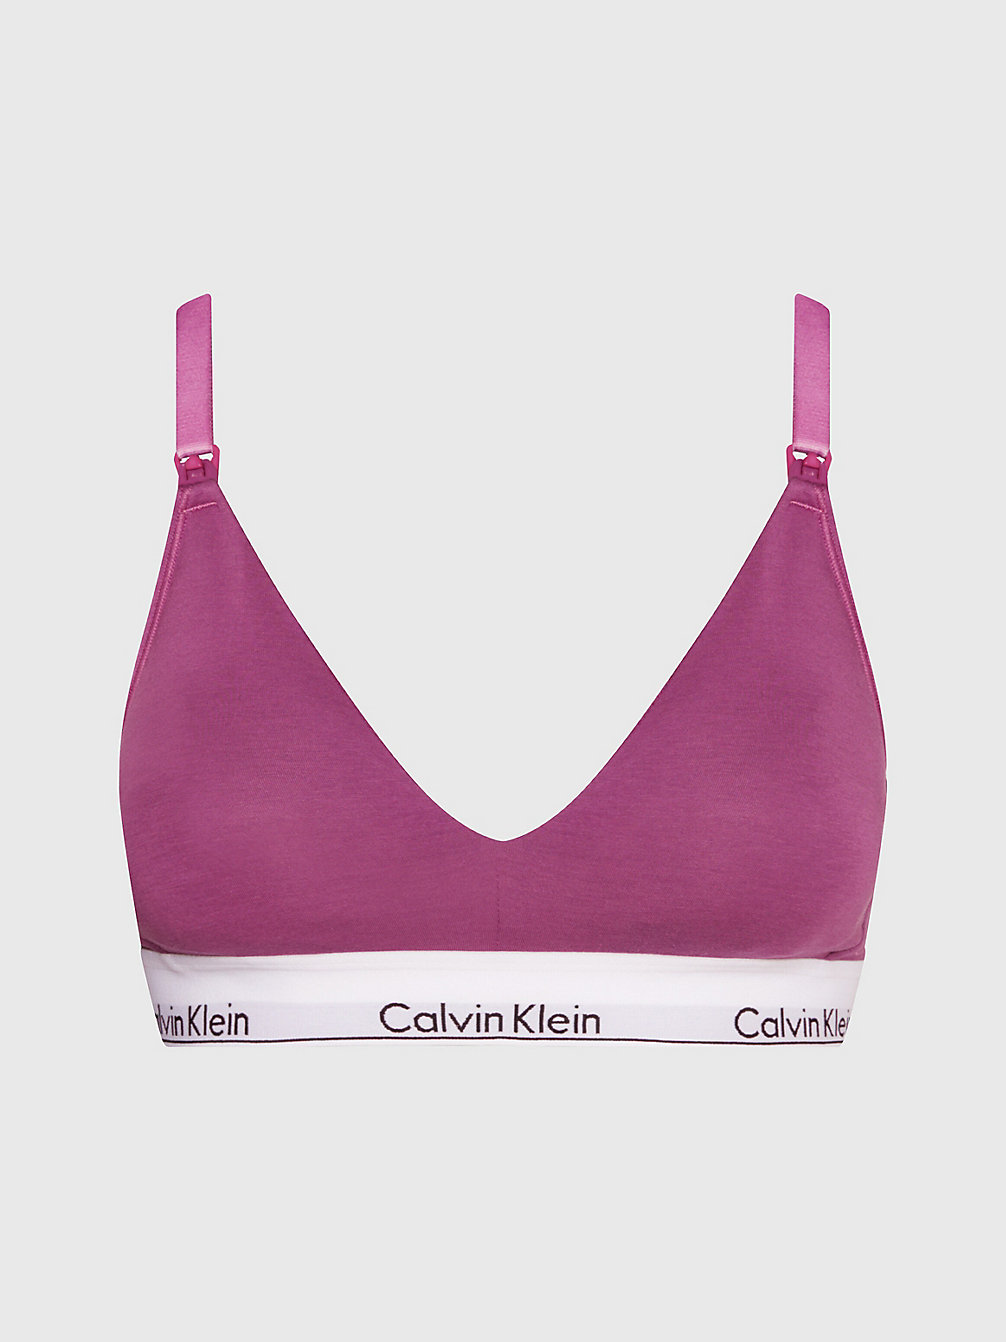 AMETHYST > Бюстгальтер для кормления - Modern Cotton > undefined Женщины - Calvin Klein